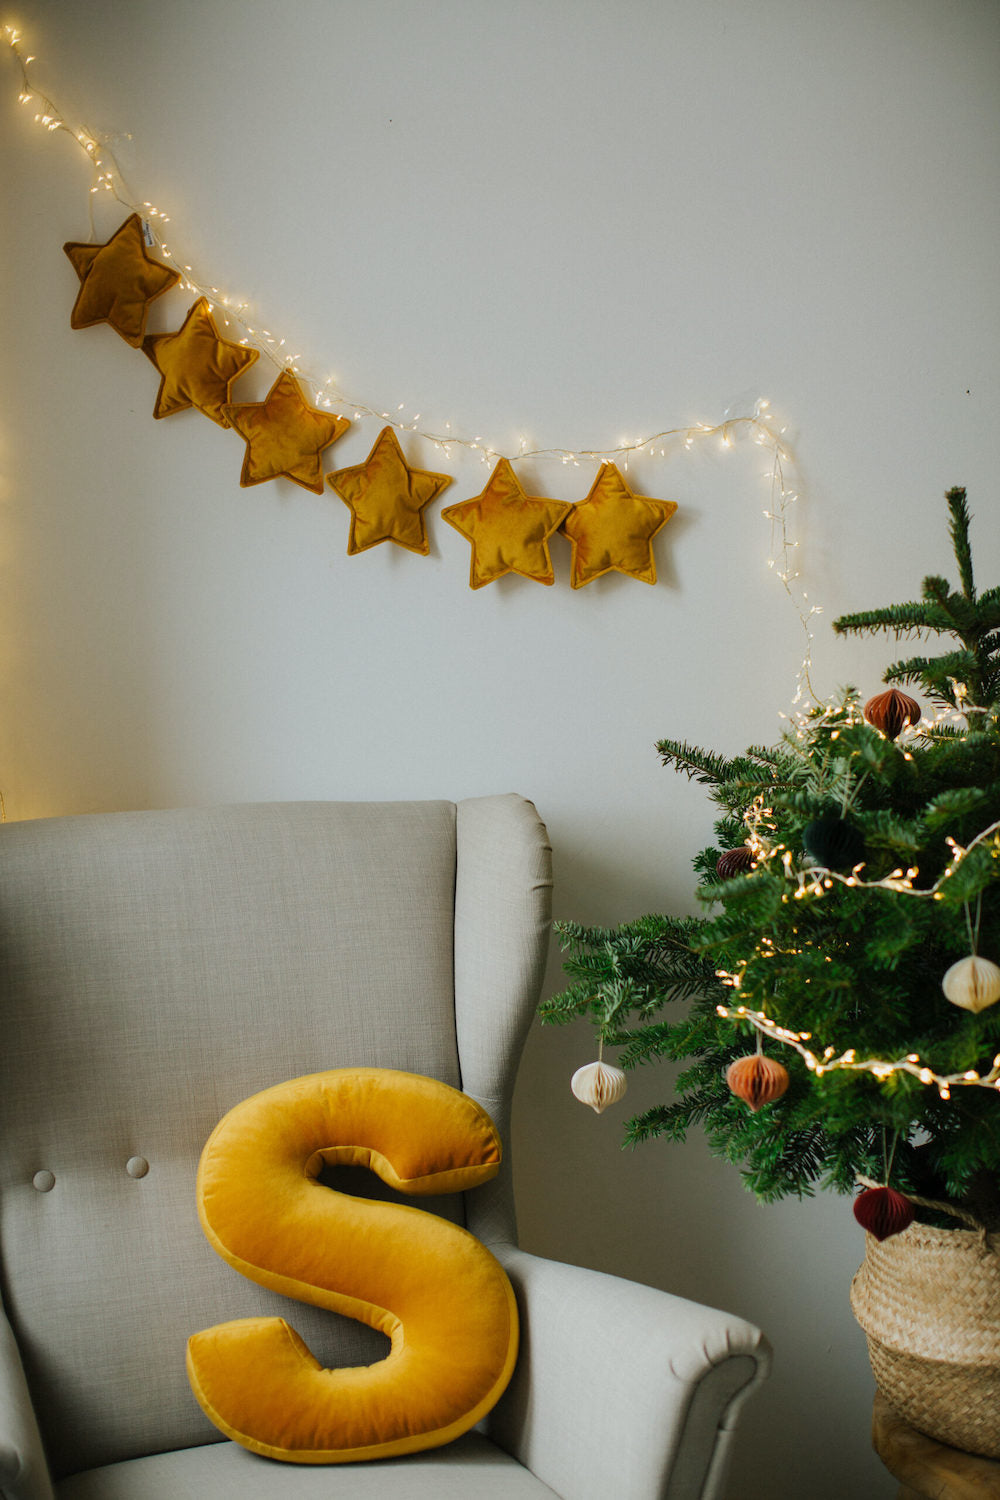 velvet star garland yellow by Bettys home over armchair with velvet letter star cushion by bettys home